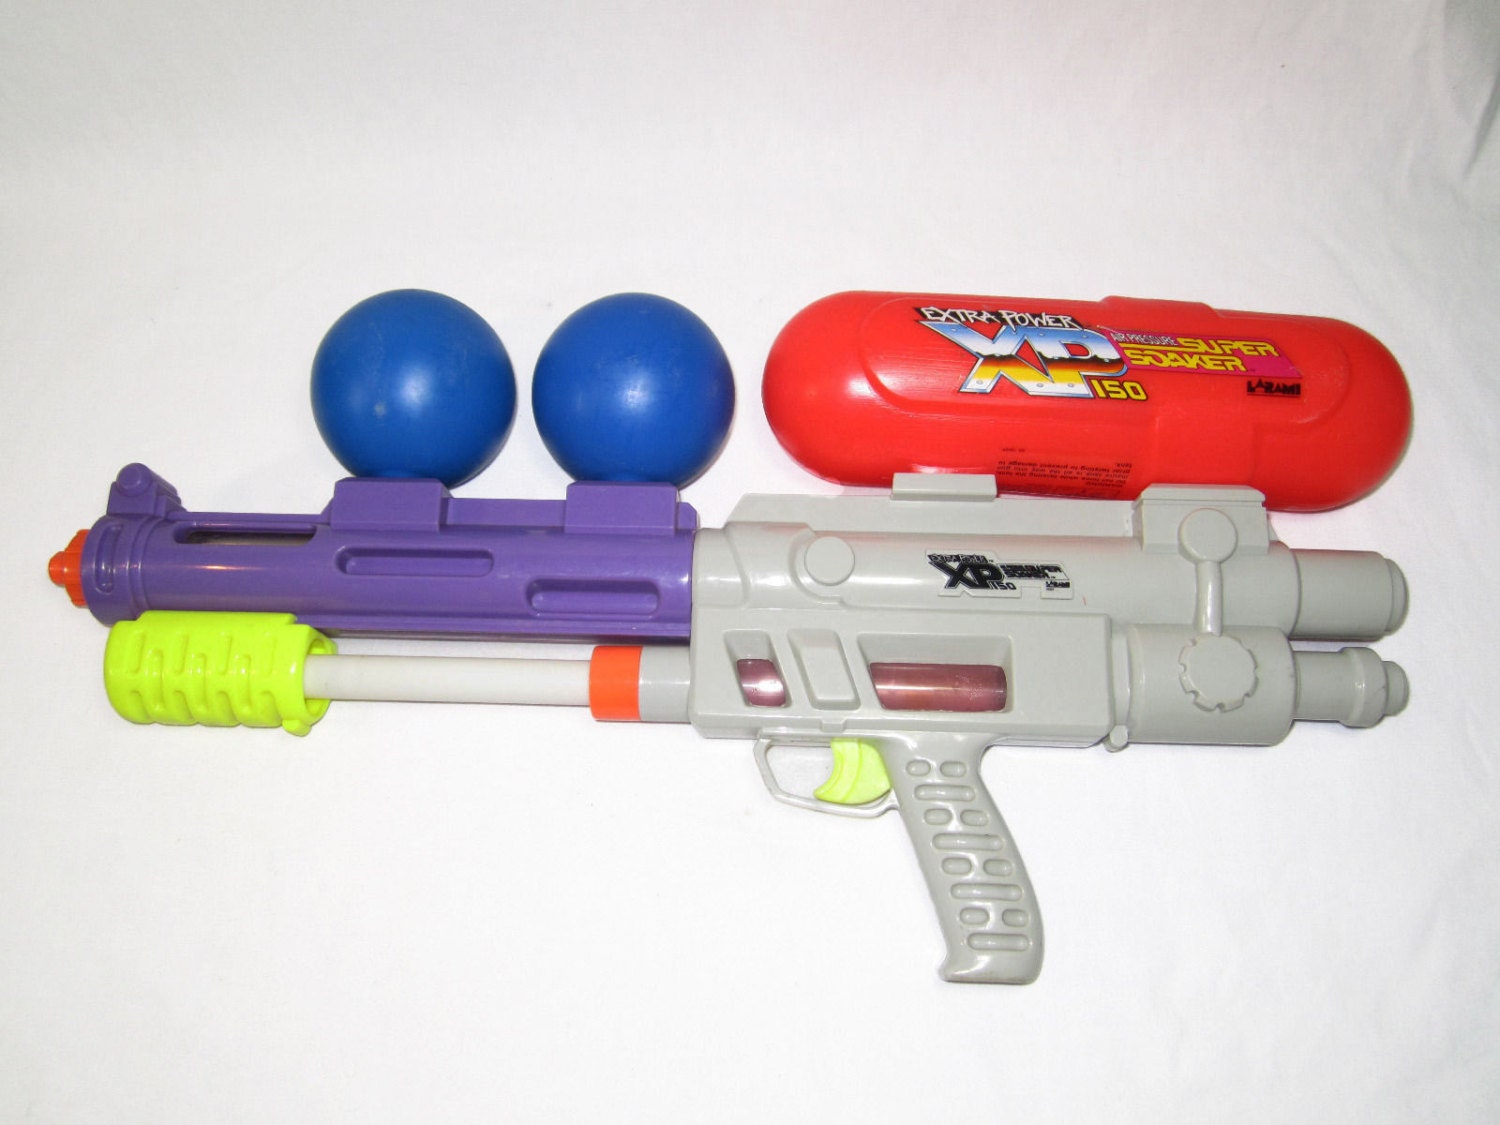 Dad's balls vs World's most powerful water gun - SPYRA TWO 